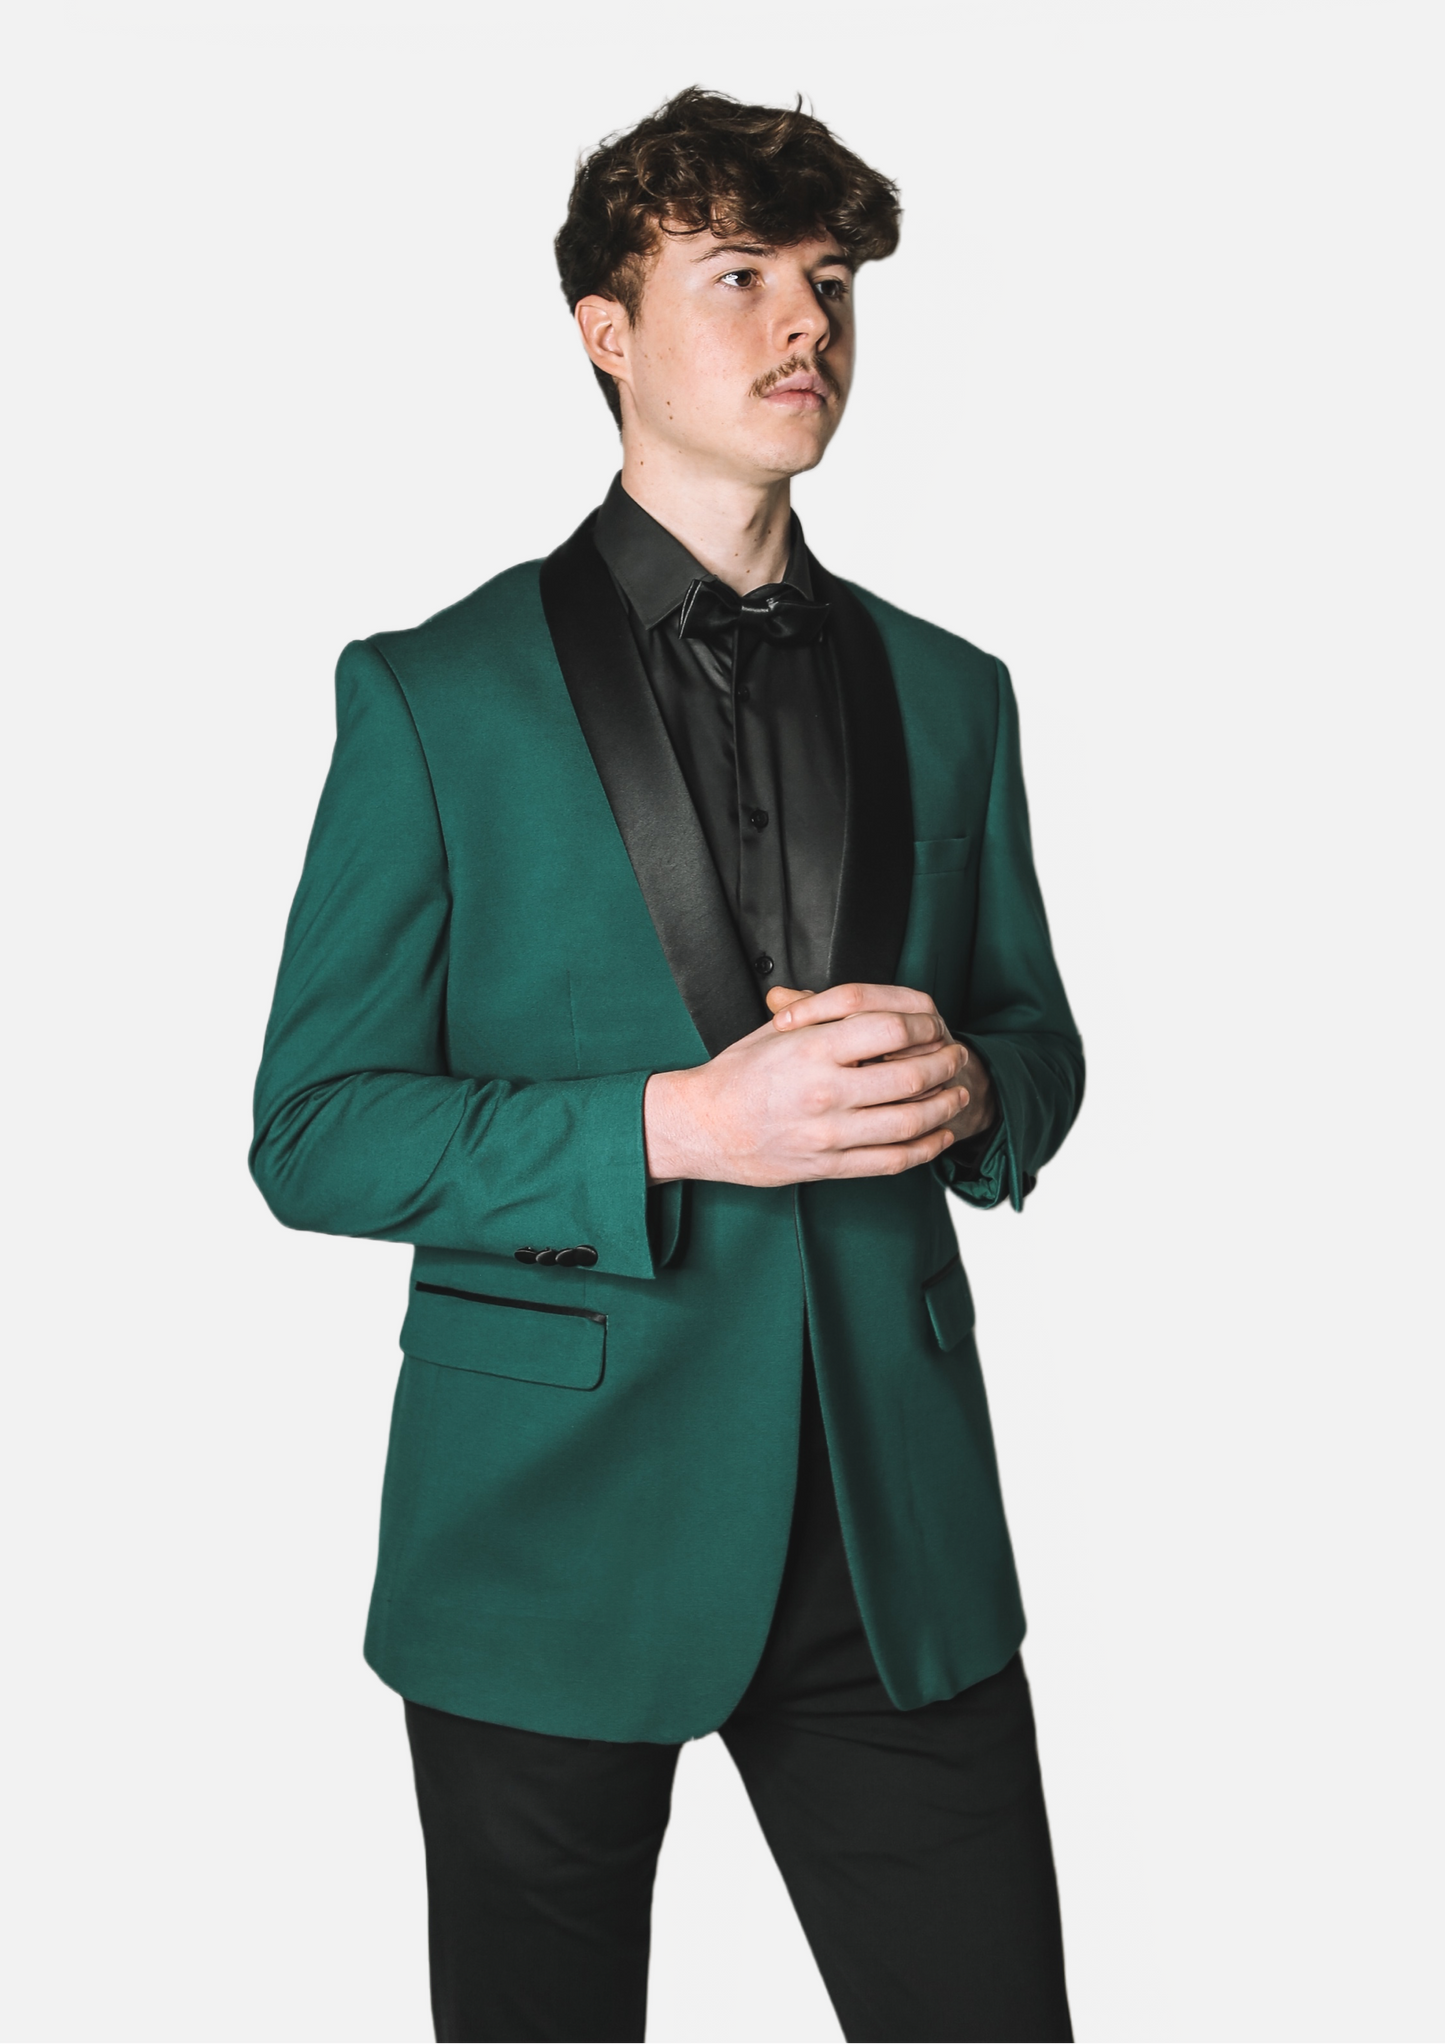 Flex Tailor Emerald Green 4-Way Stretch Tuxedo Jacket  - Sleek Mobility